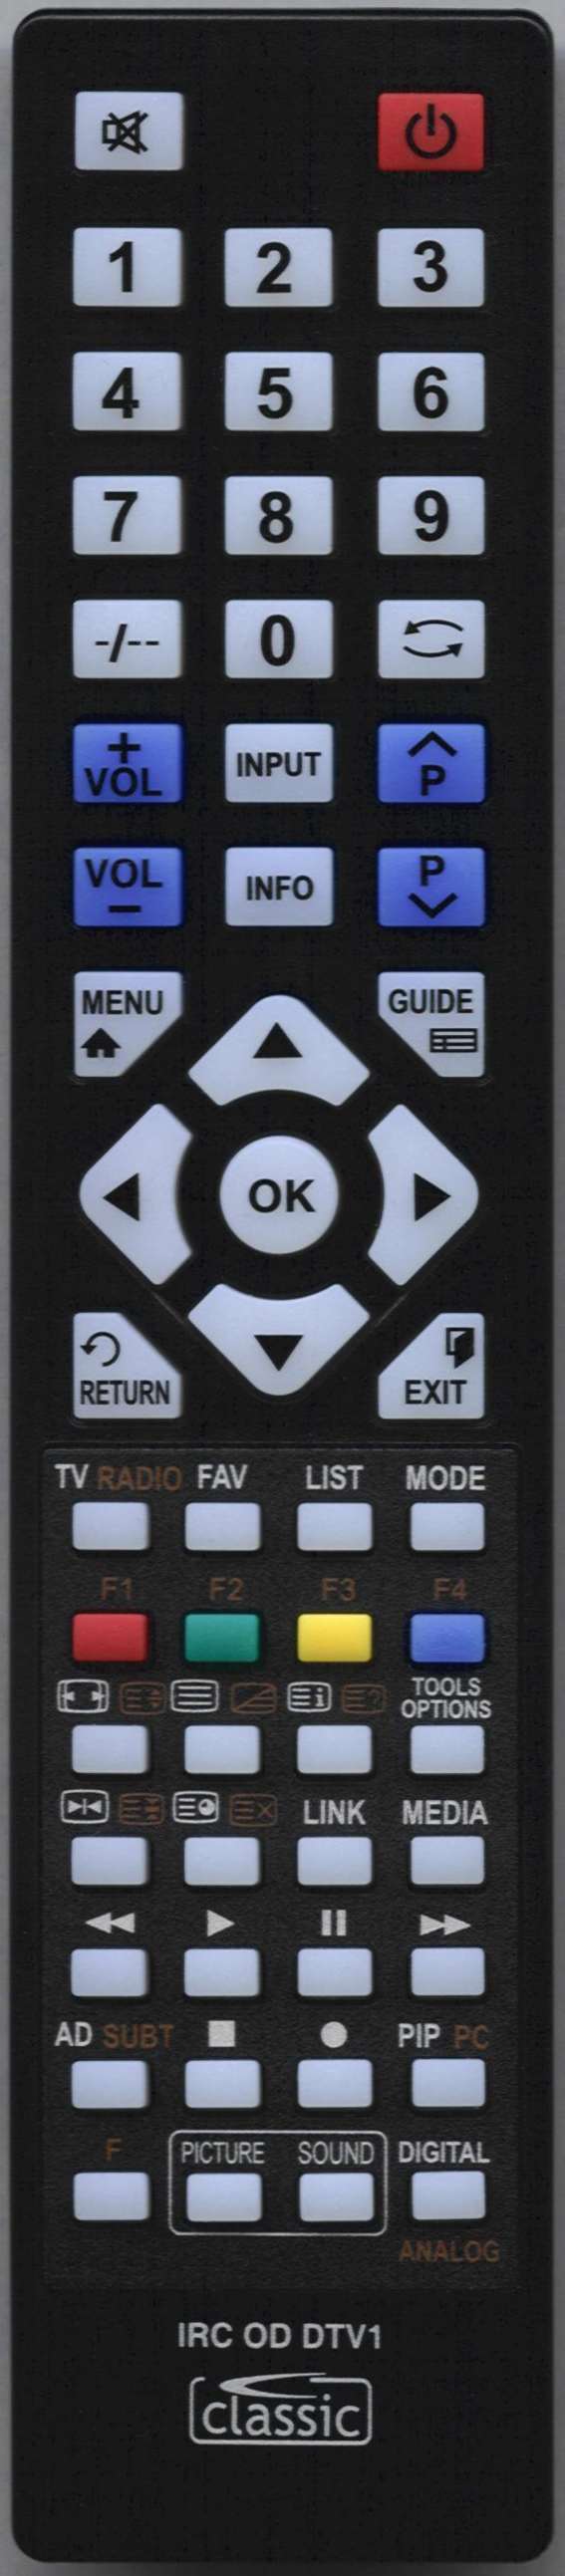 FERGUSON F5020DVB4K Remote Control Alternative 